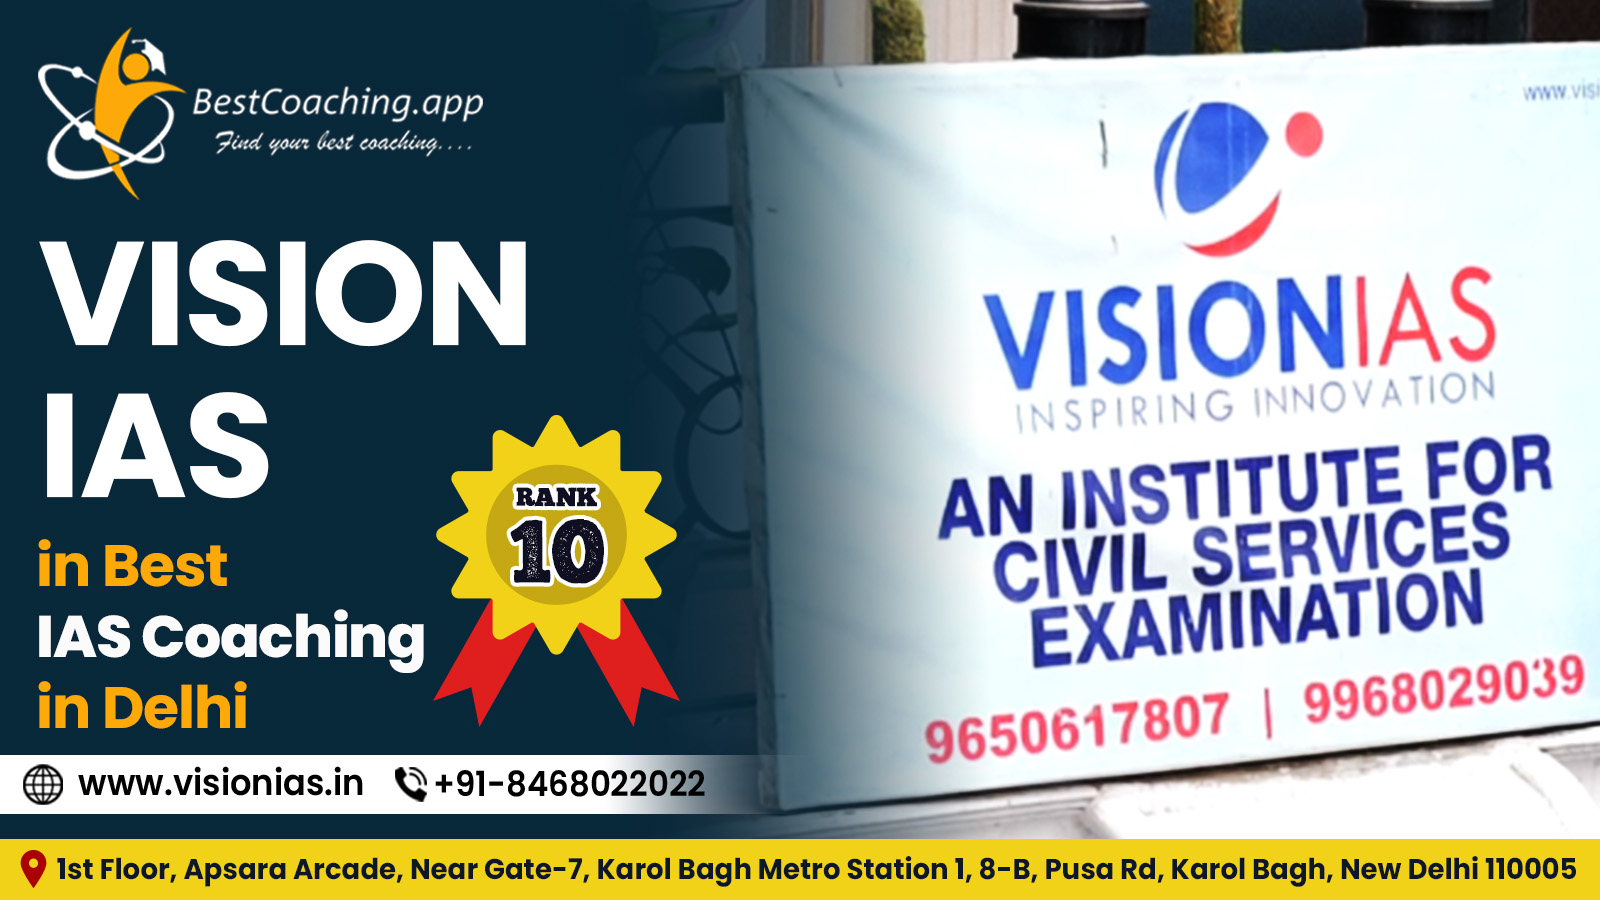 Vision IAS | Rank 10 in Best IAS Coaching in Delhi 